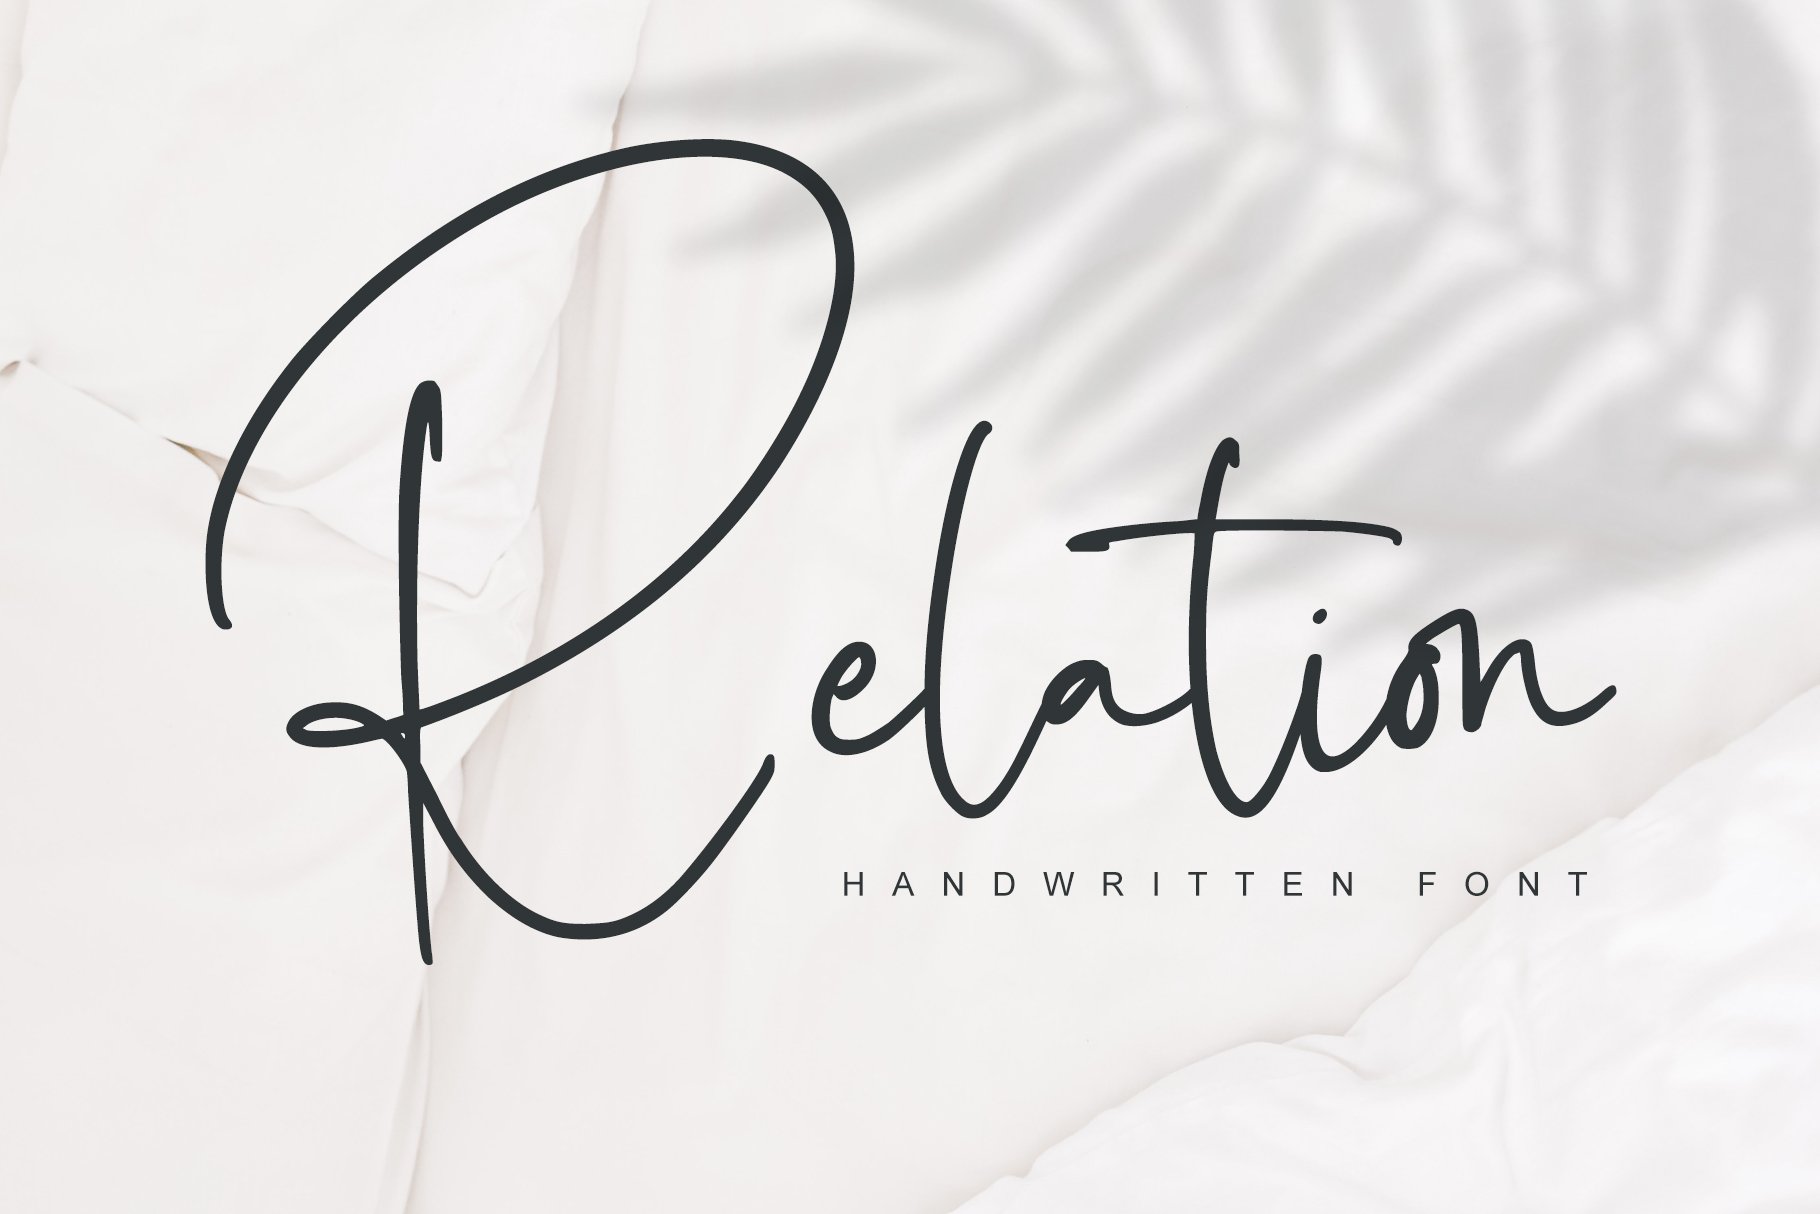 Relation - Script Handwrittem Font cover image.